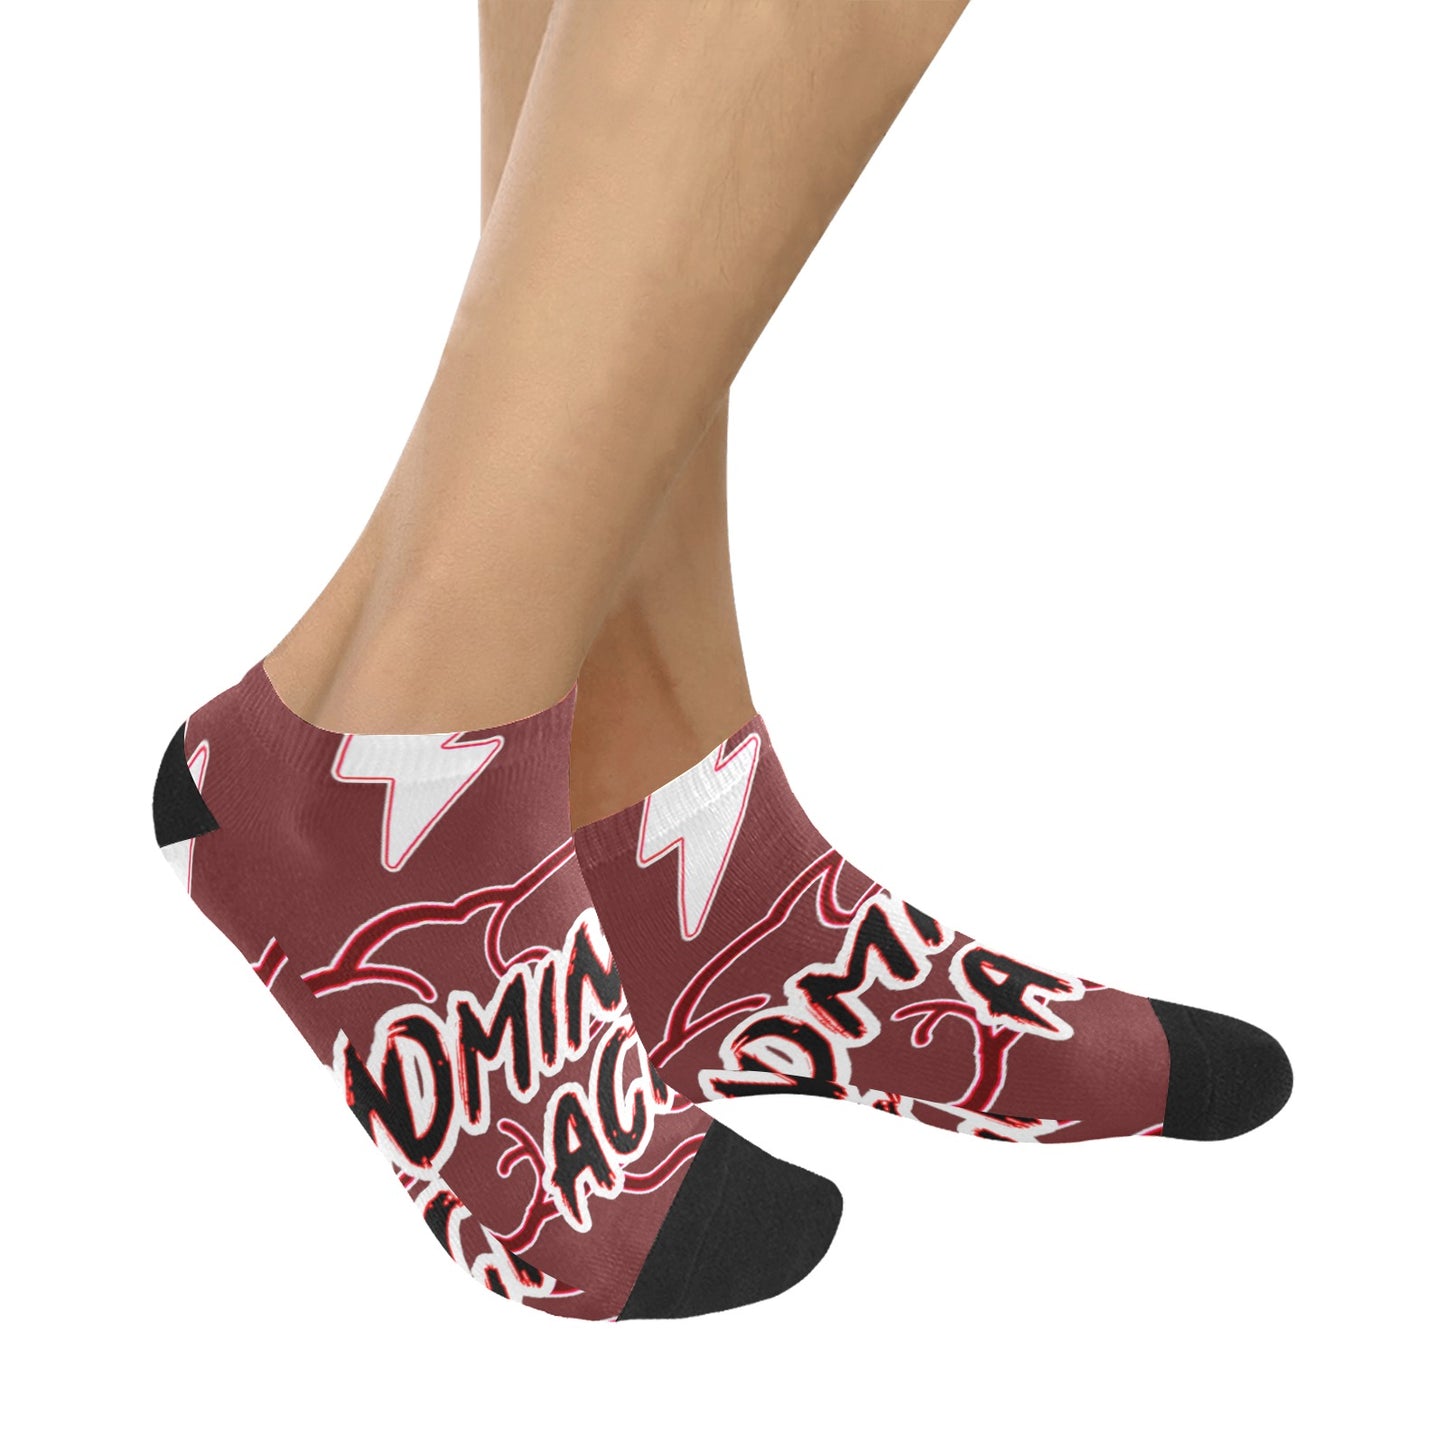 fz men's mind ankle socks one size / fz mind socks - burgundy men's ankle socks